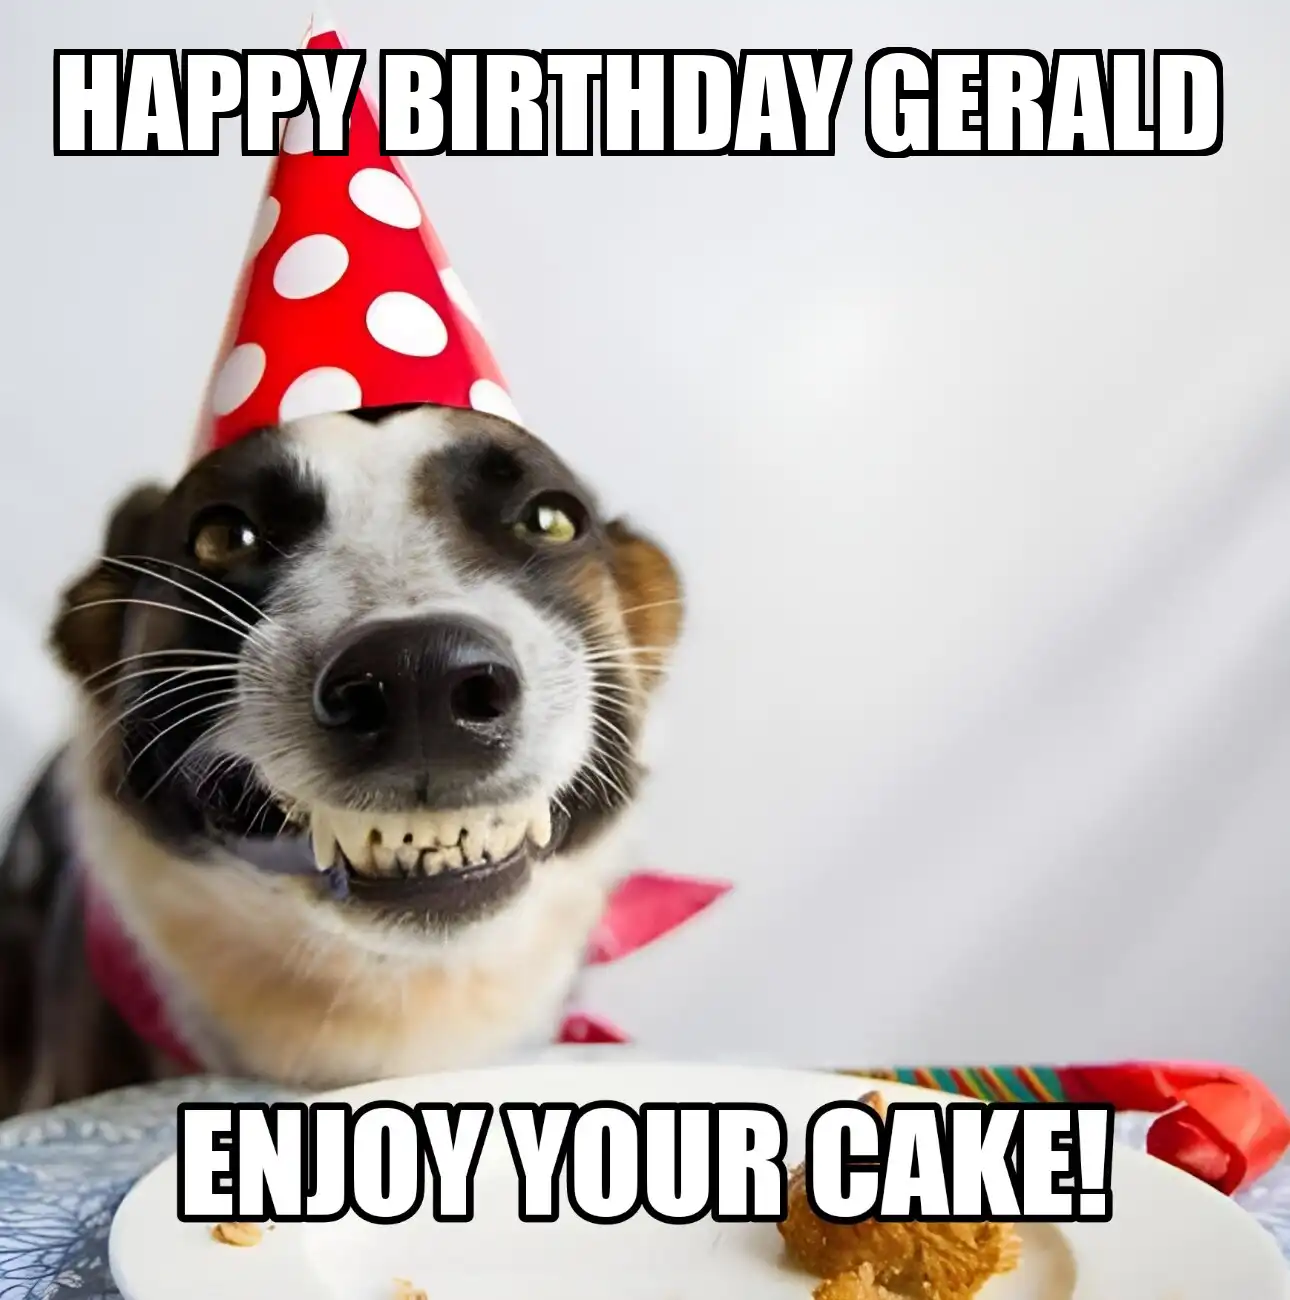 Happy Birthday Gerald Enjoy Your Cake Dog Meme